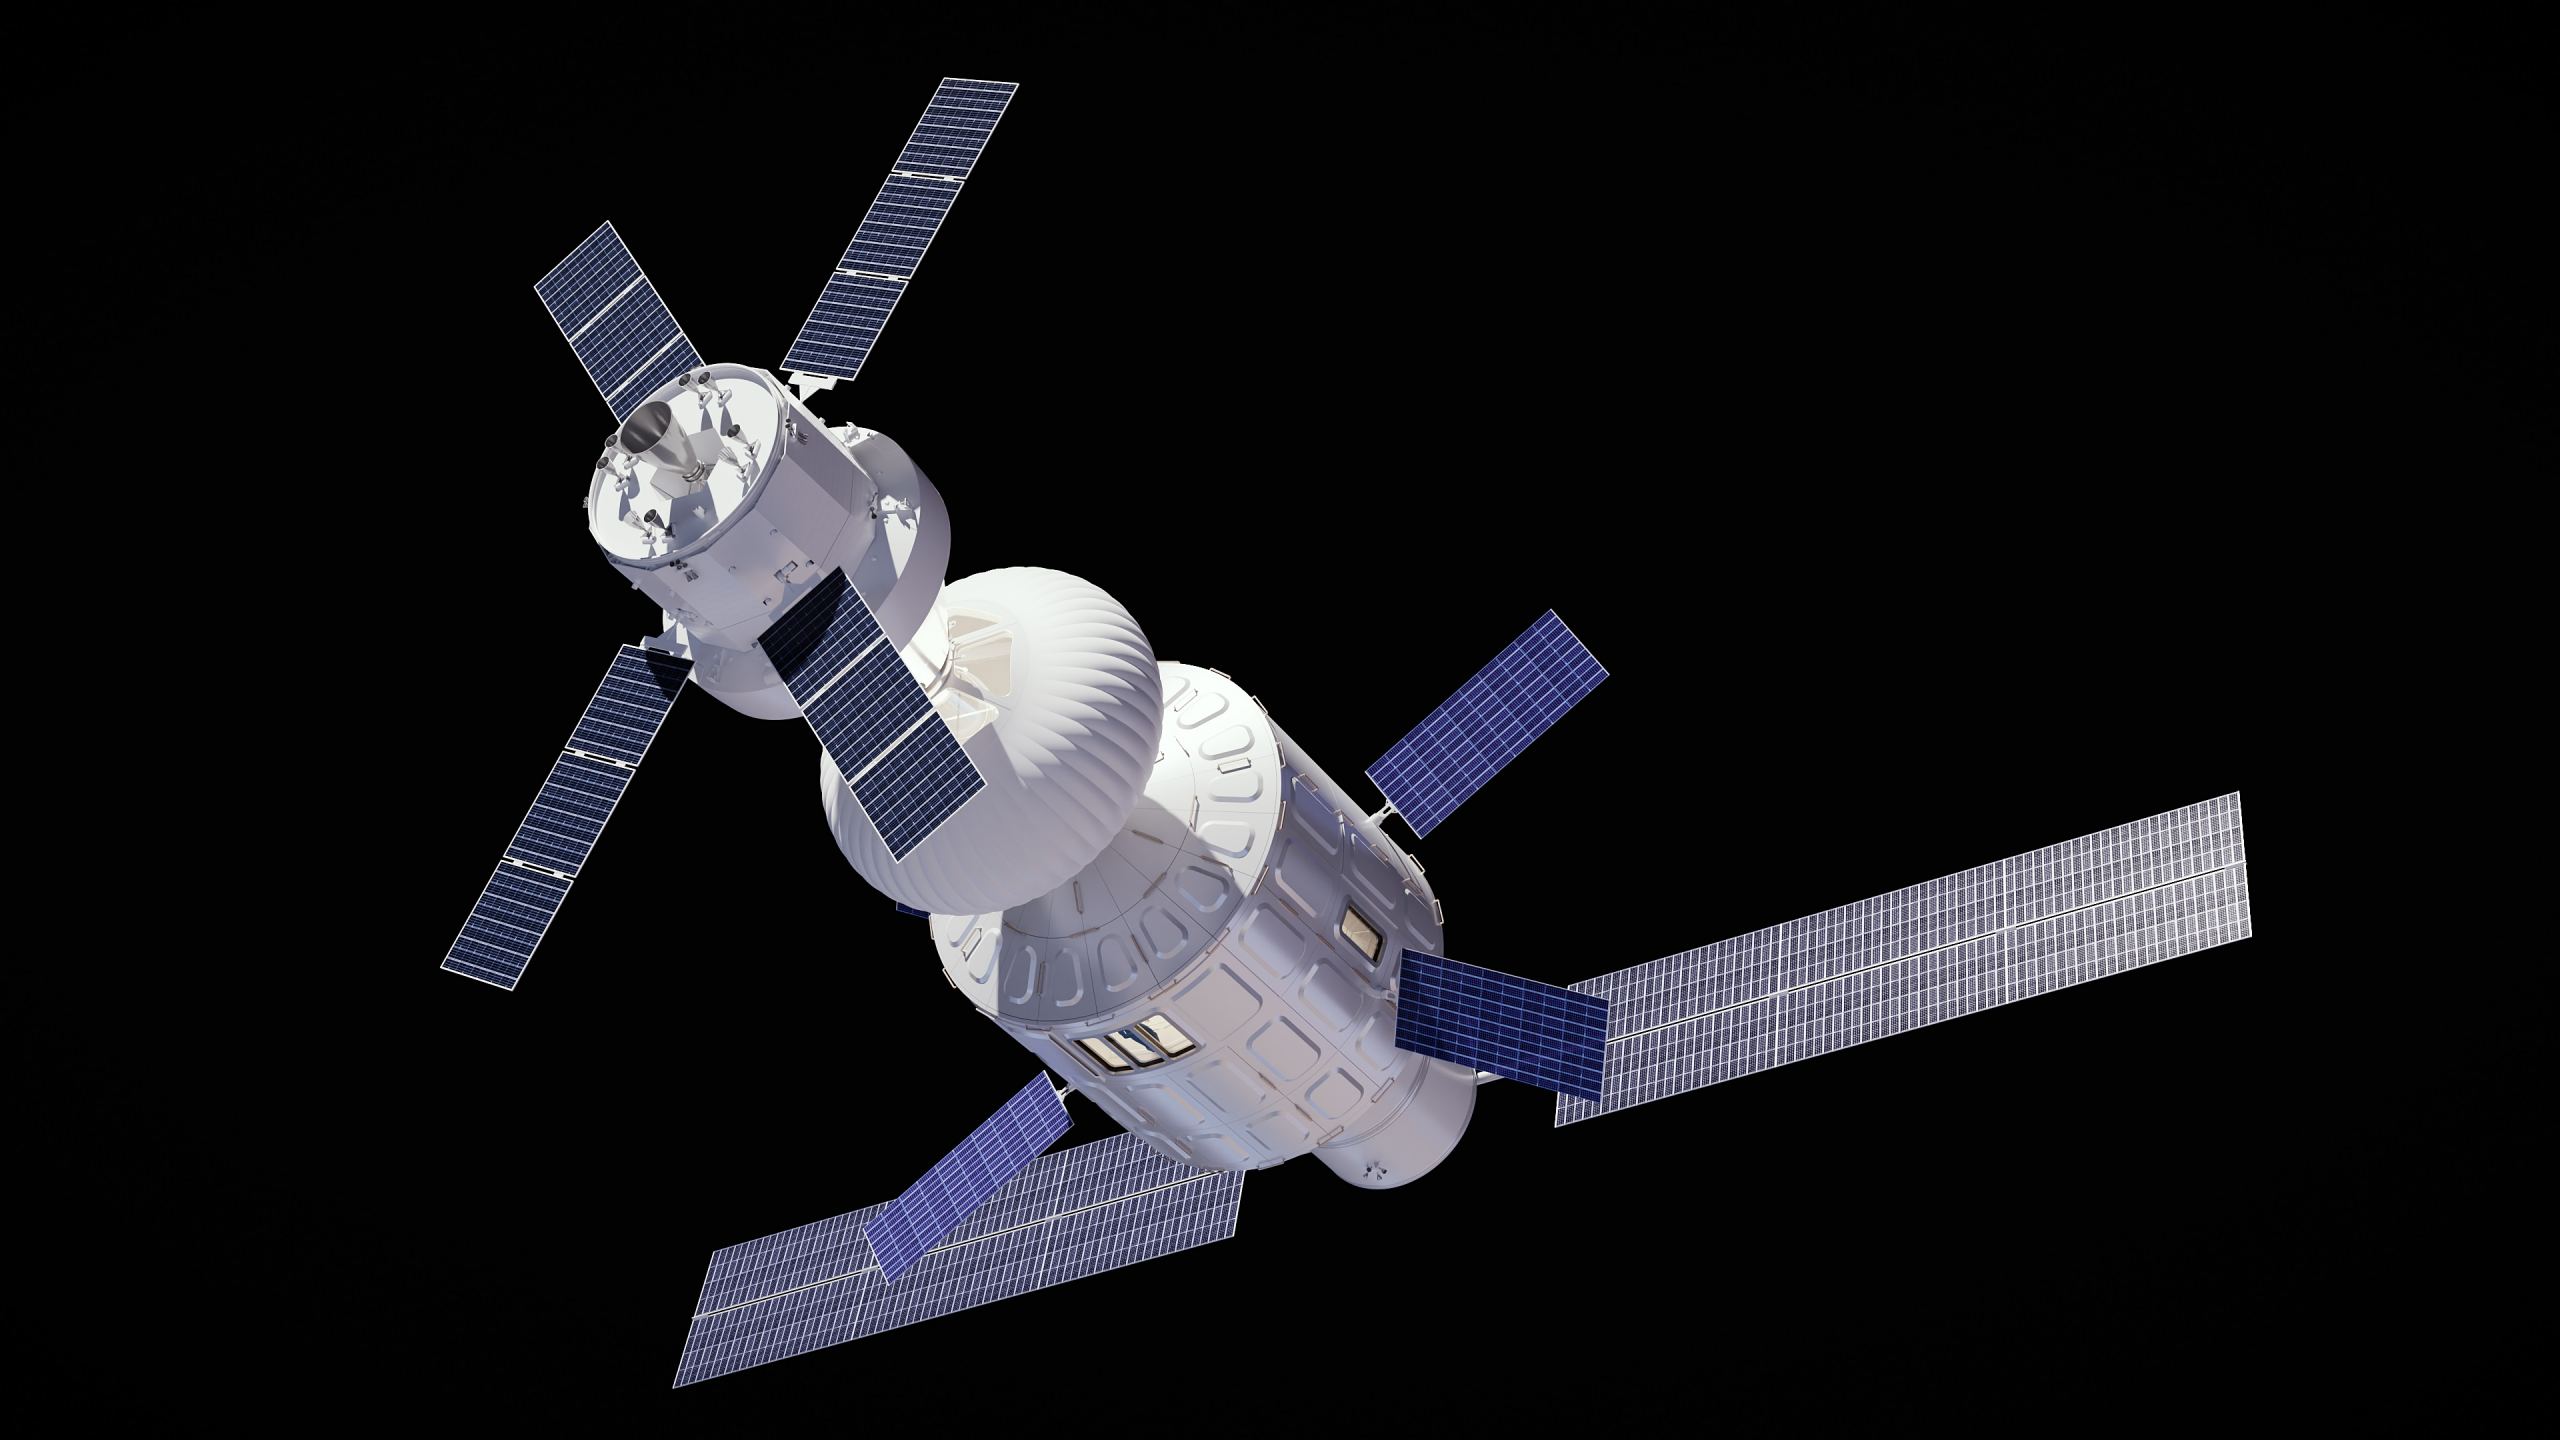 futuristic space station designs